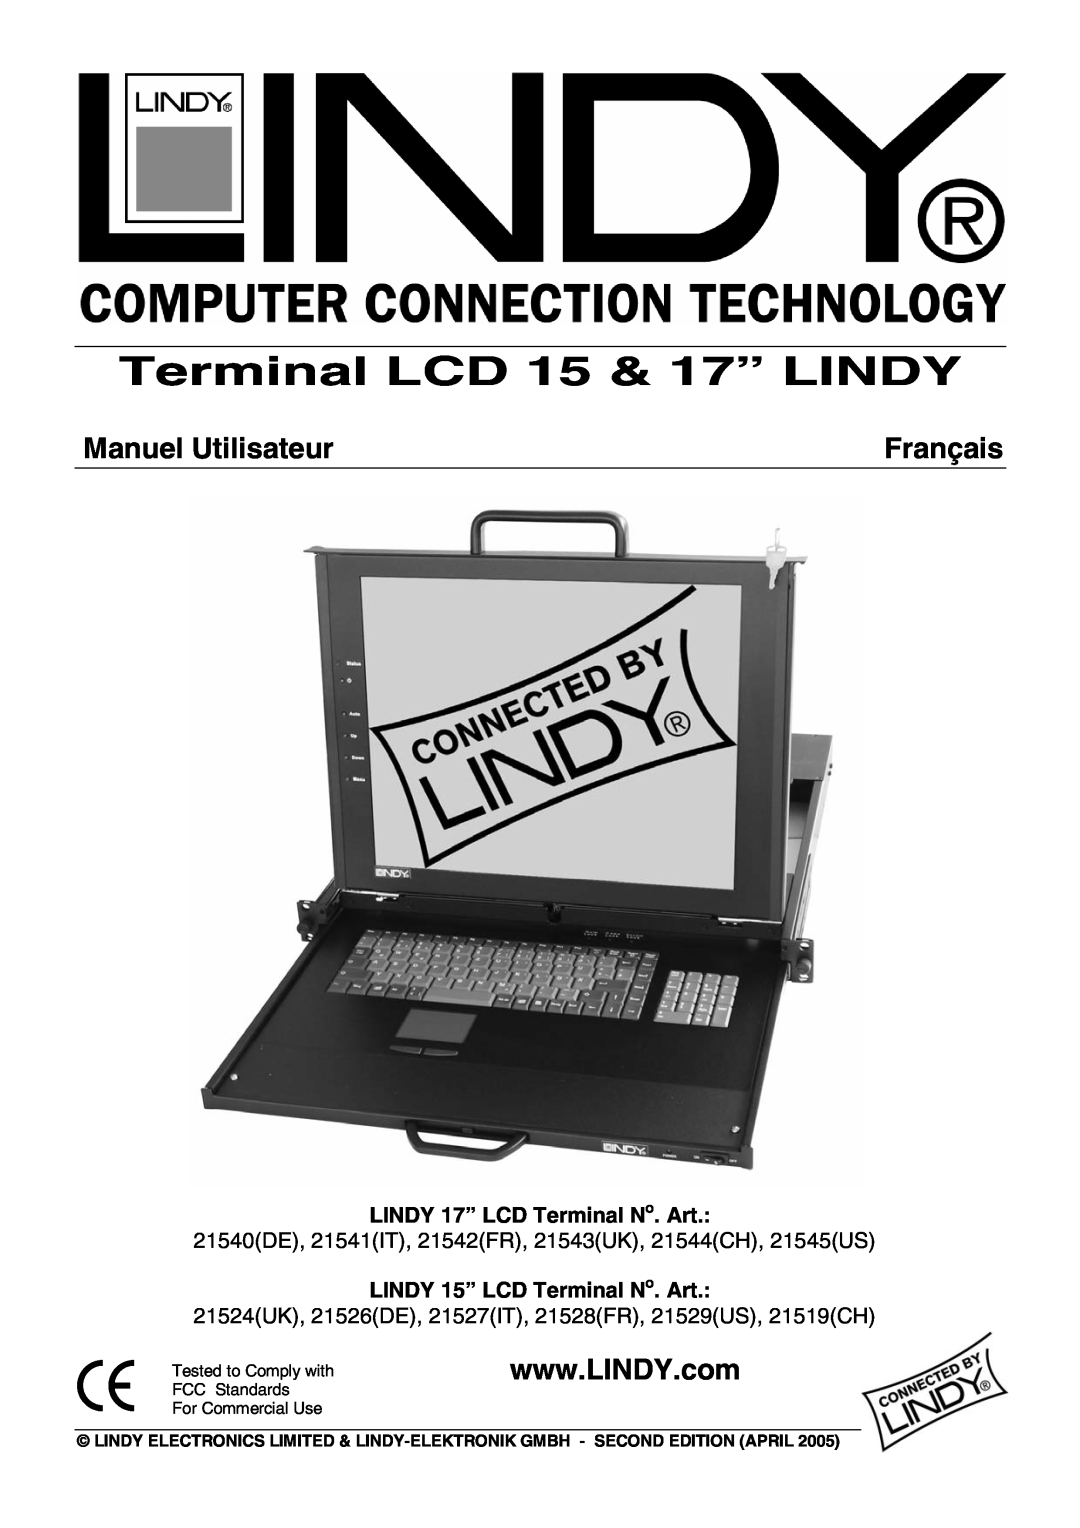 Lindy Laptop manual Terminal LCD 15 & 17” LINDY, Manuel Utilisateur, Français, LINDY 17” LCD Terminal No. Art 